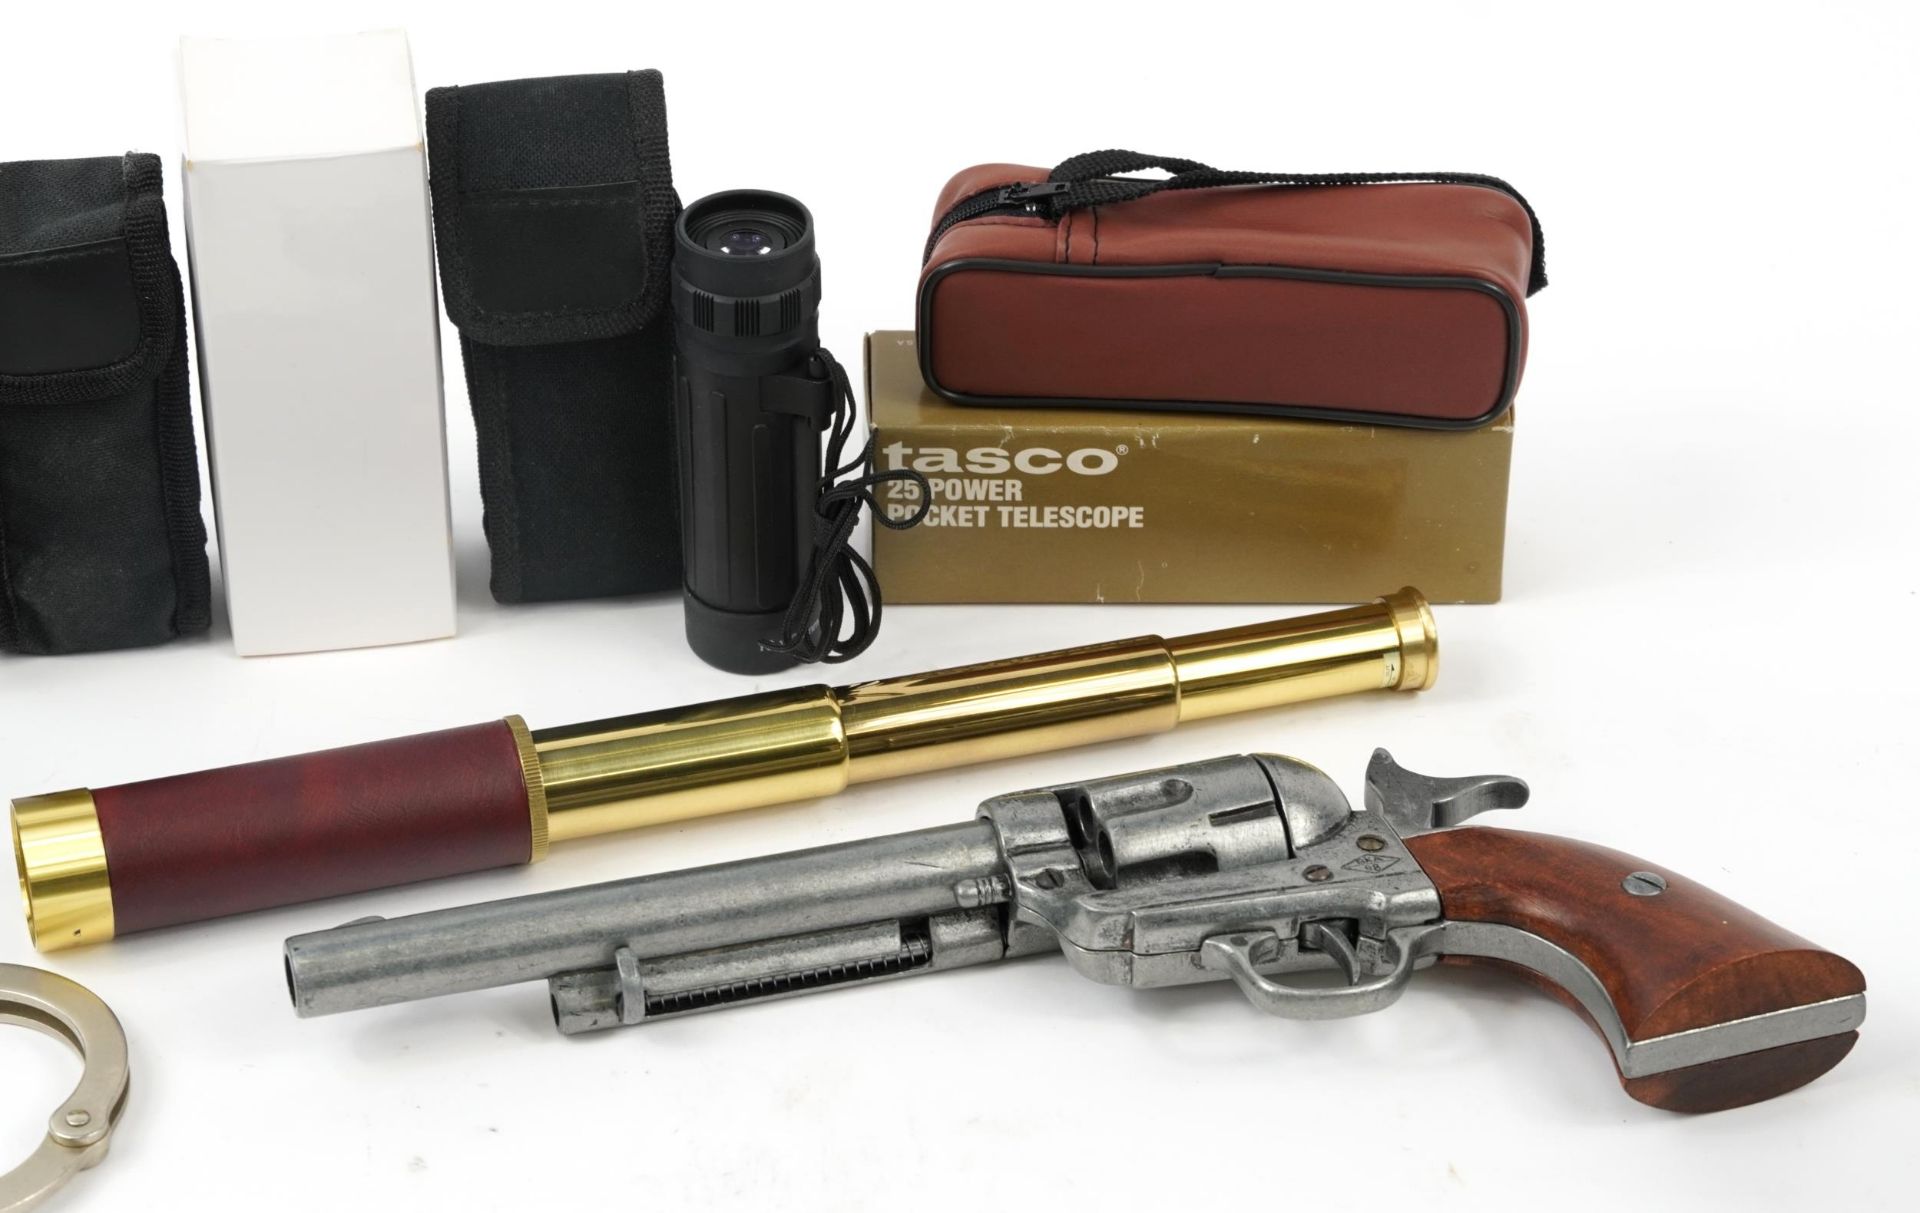 Sundry items comprising a pair of Miranda binoculars, pocket telescopes, decorative revolver and a - Bild 3 aus 3